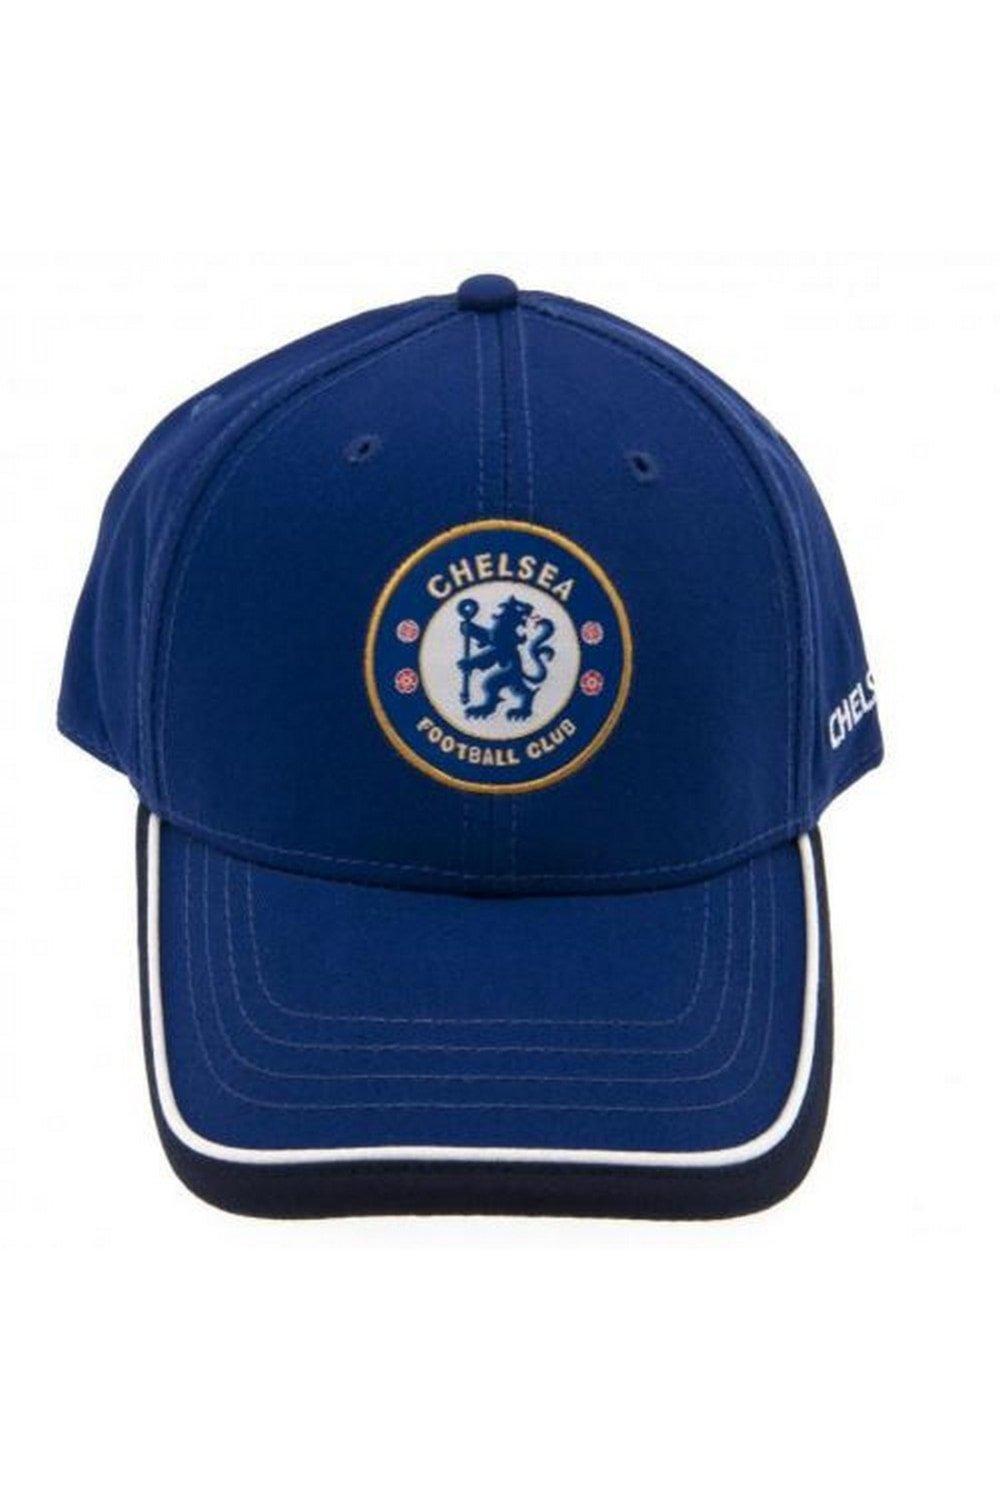 Chelsea FC Baseball Cap|navy